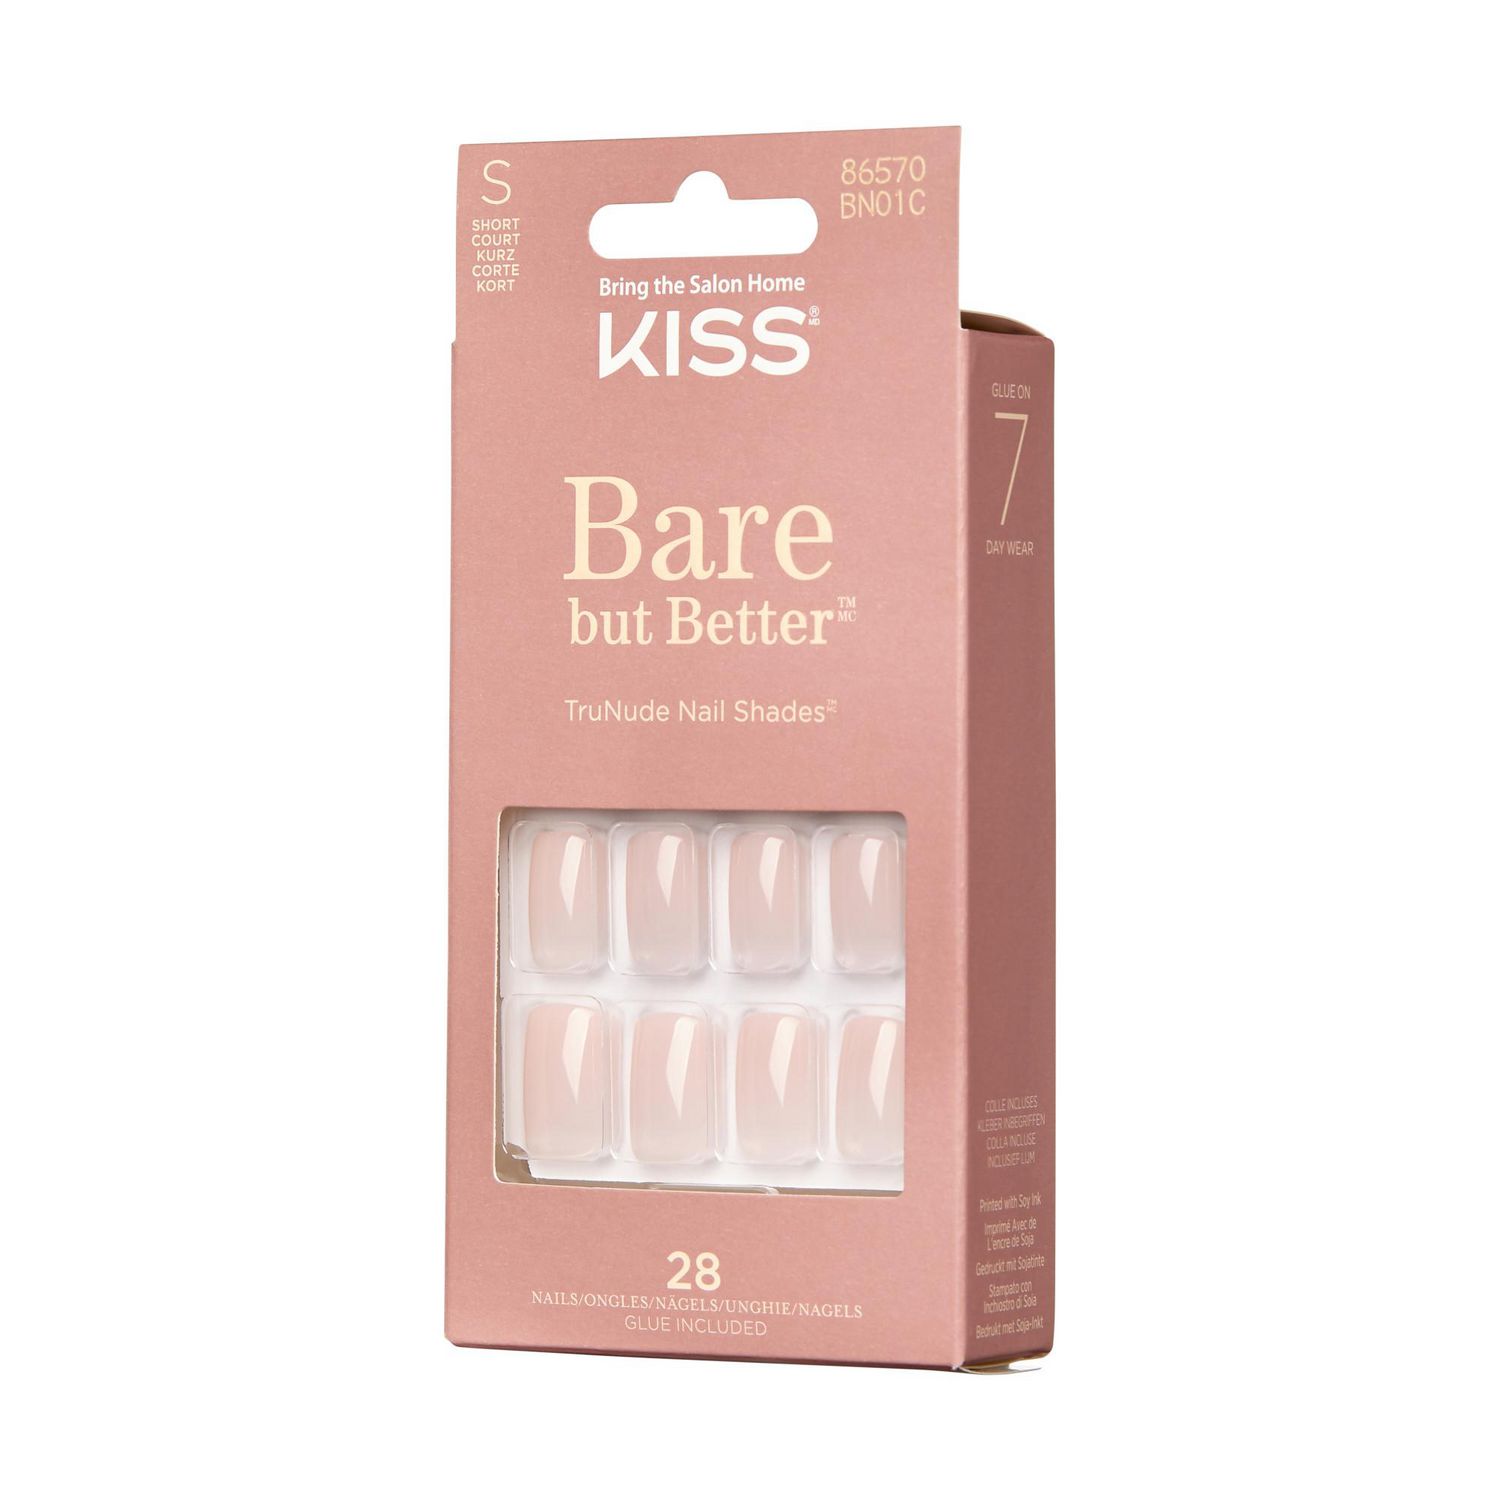 KISS Bare but Better Nails Nudies - Fake Nail, 28 Count, Short